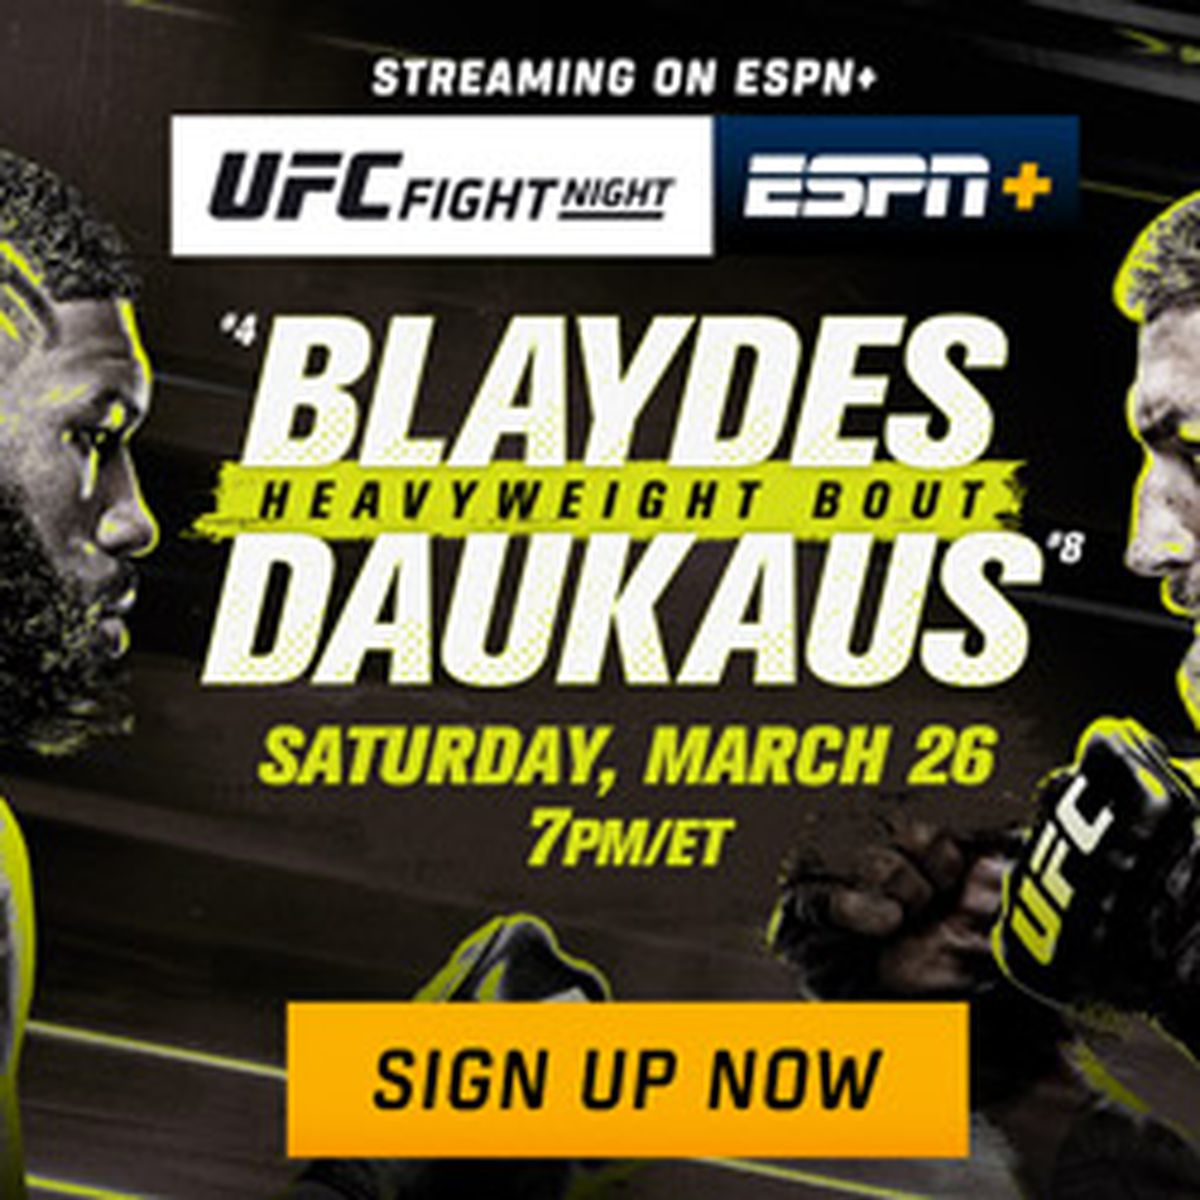 Prédictions ‘Columbus’ de l’UFC, aperçu tardif de l’undercard ‘Prelims’ |  Blaydes contre Daukaus